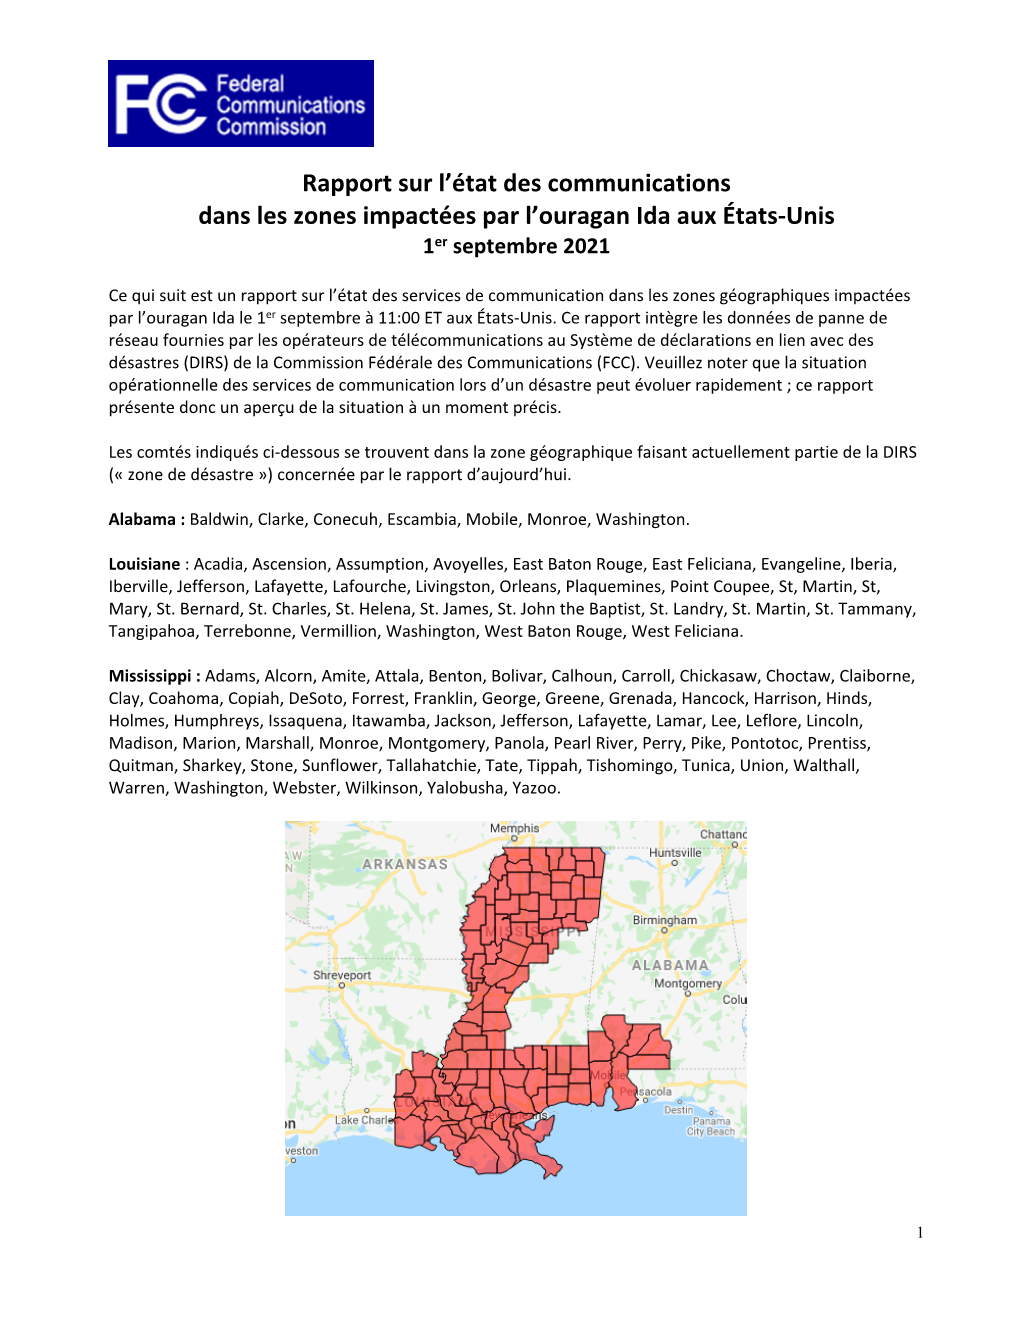 FCC Public Outage Report -Hurricane Ida -09-01-2021 French